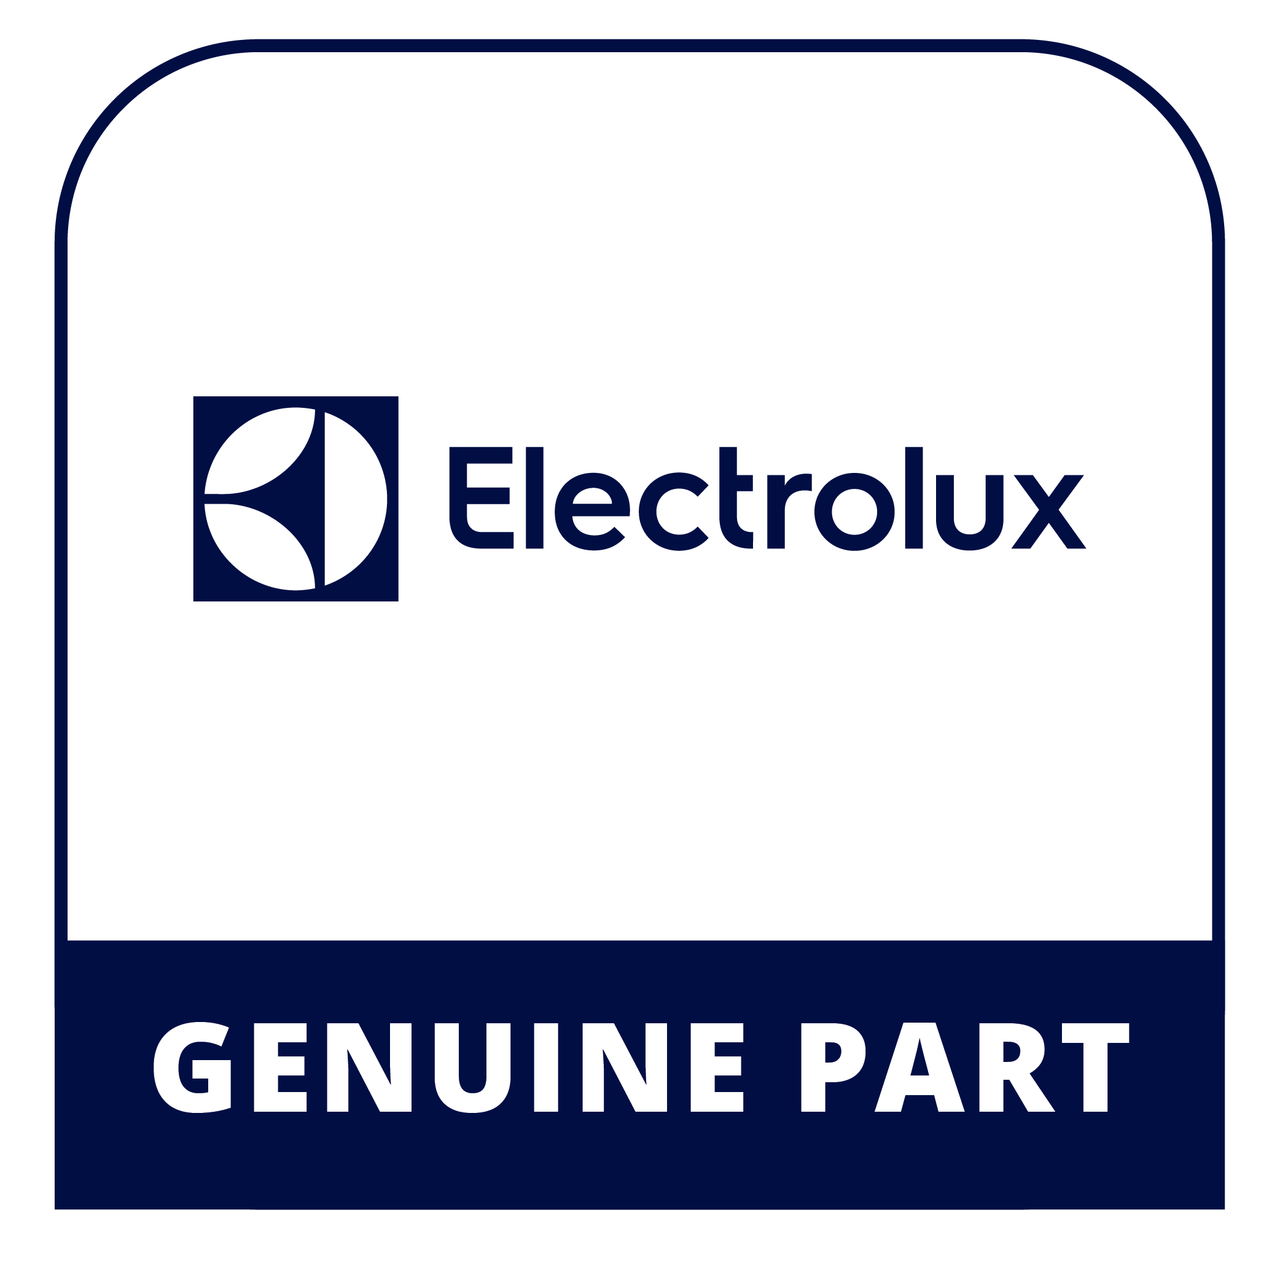 Frigidaire - Electrolux 5303918416 - Thermistor Kit - Genuine Electrolux Part